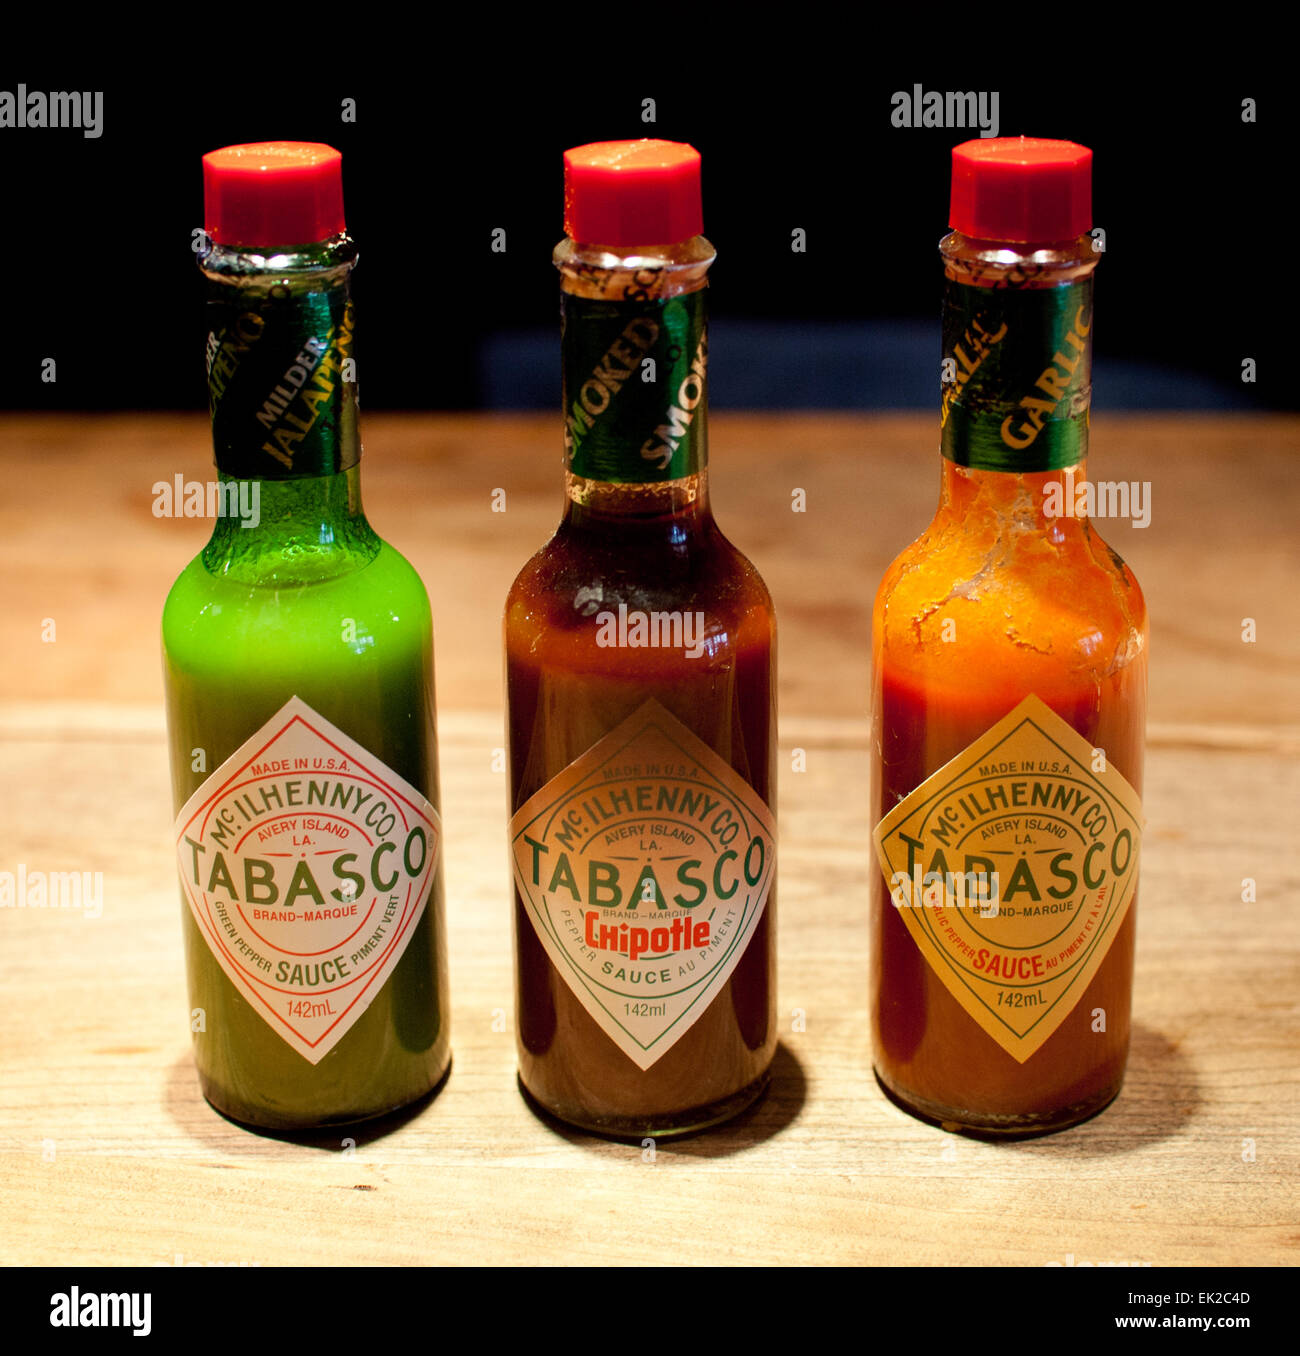 Bottles of Tabasco sauce. Jalapeño-based green, chipotle-based smoked and  garlic varieties shown Stock Photo - Alamy